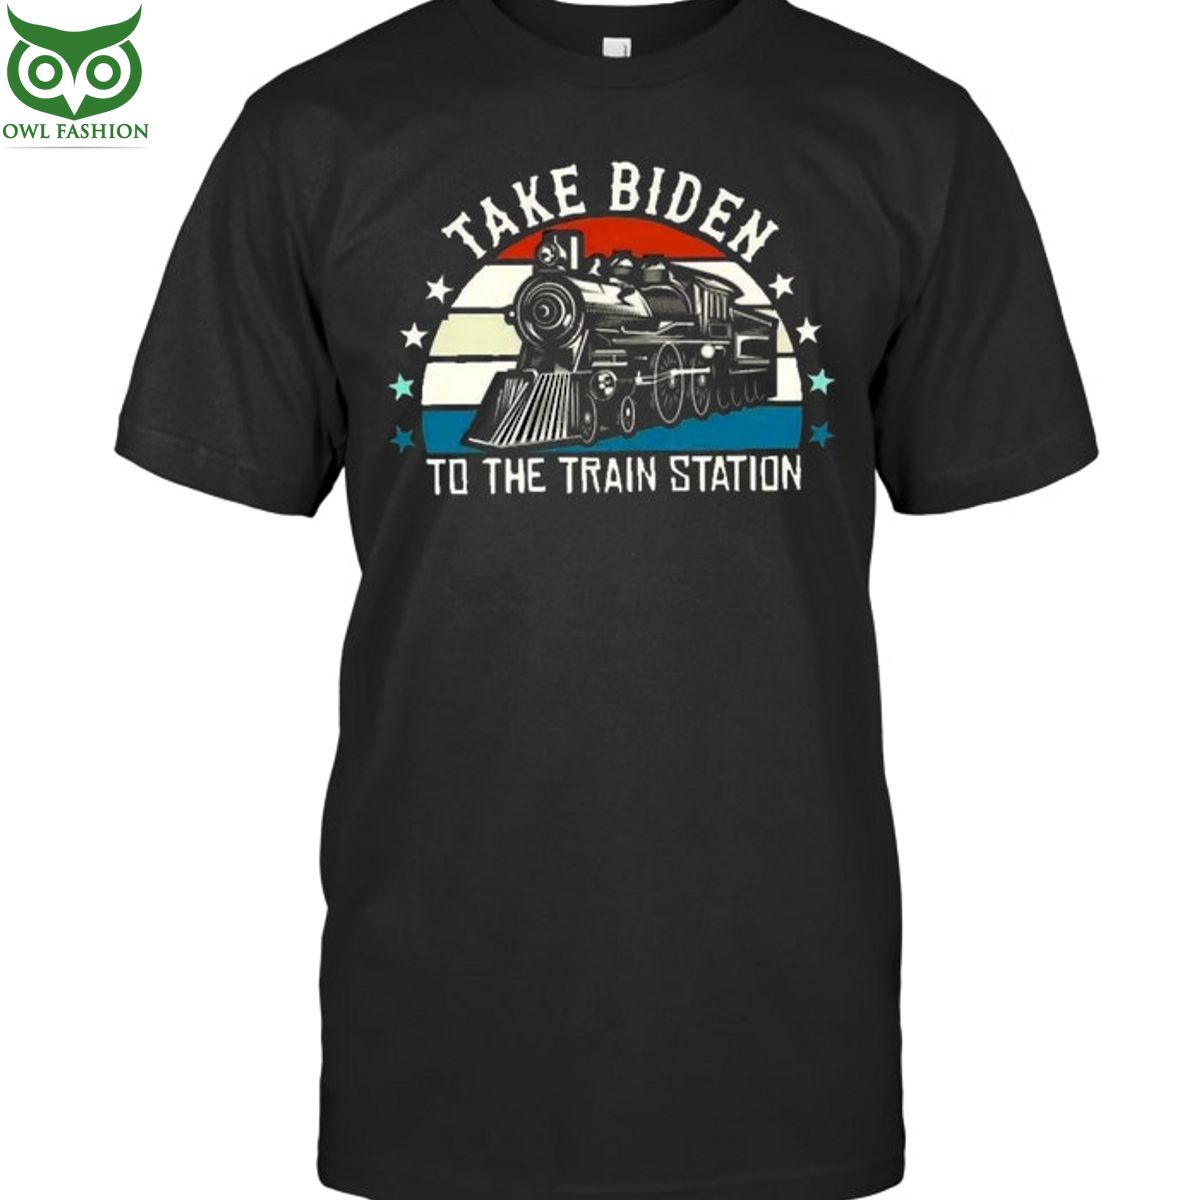 Take Biden to the train station t shirt Shop Owl Fashion